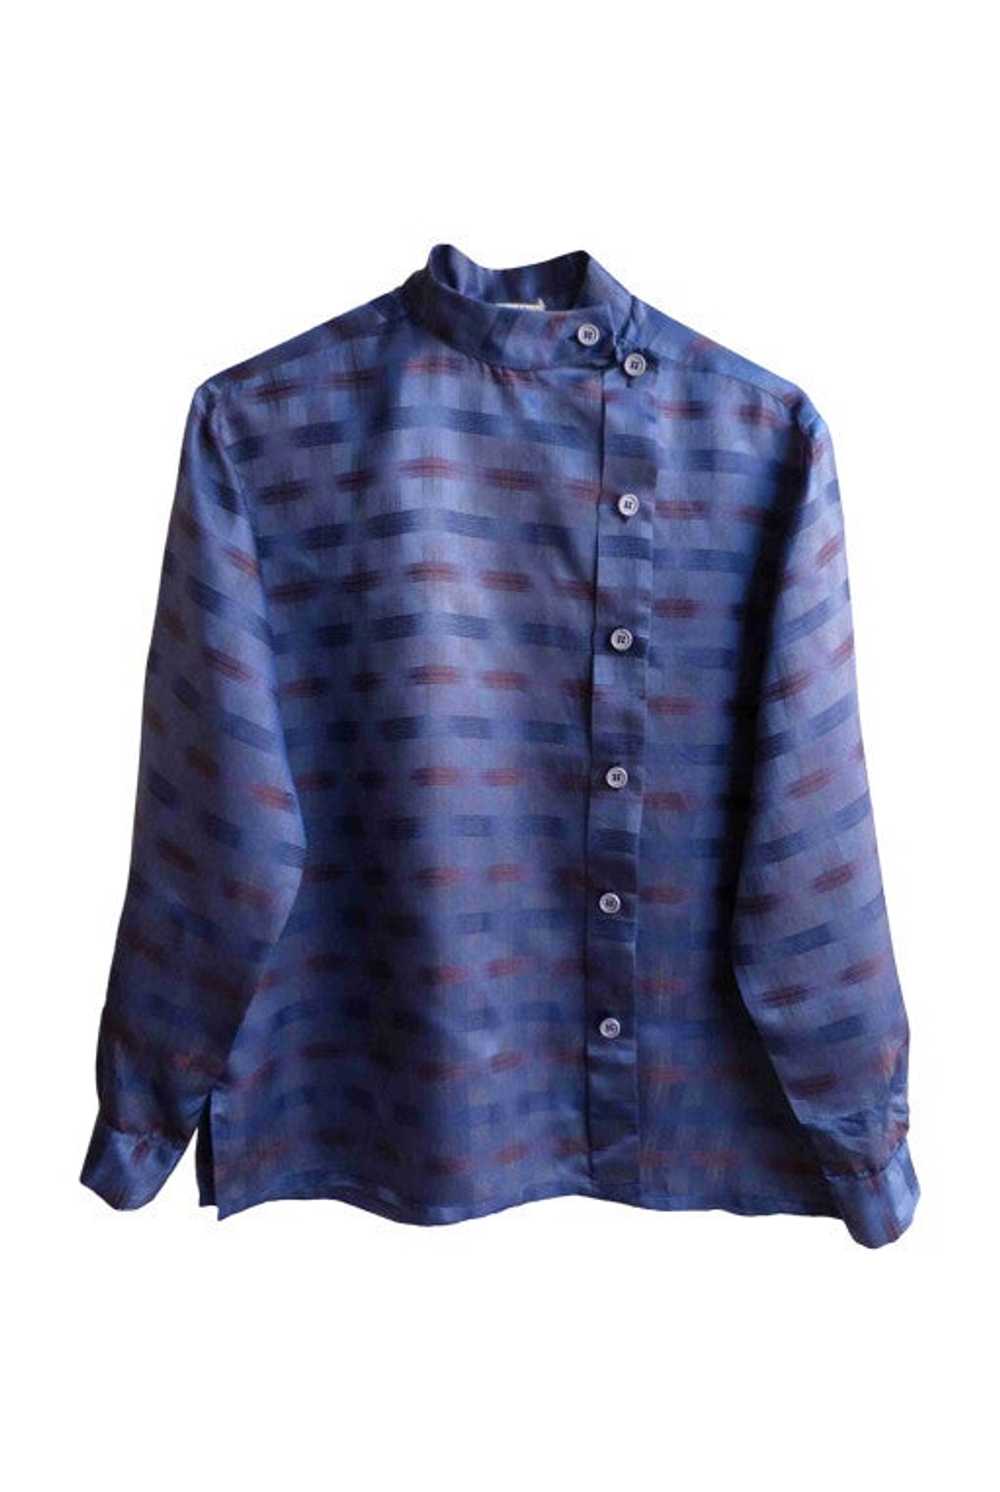 Christian Dior blouse - DIOR brand silk blouse - … - image 1